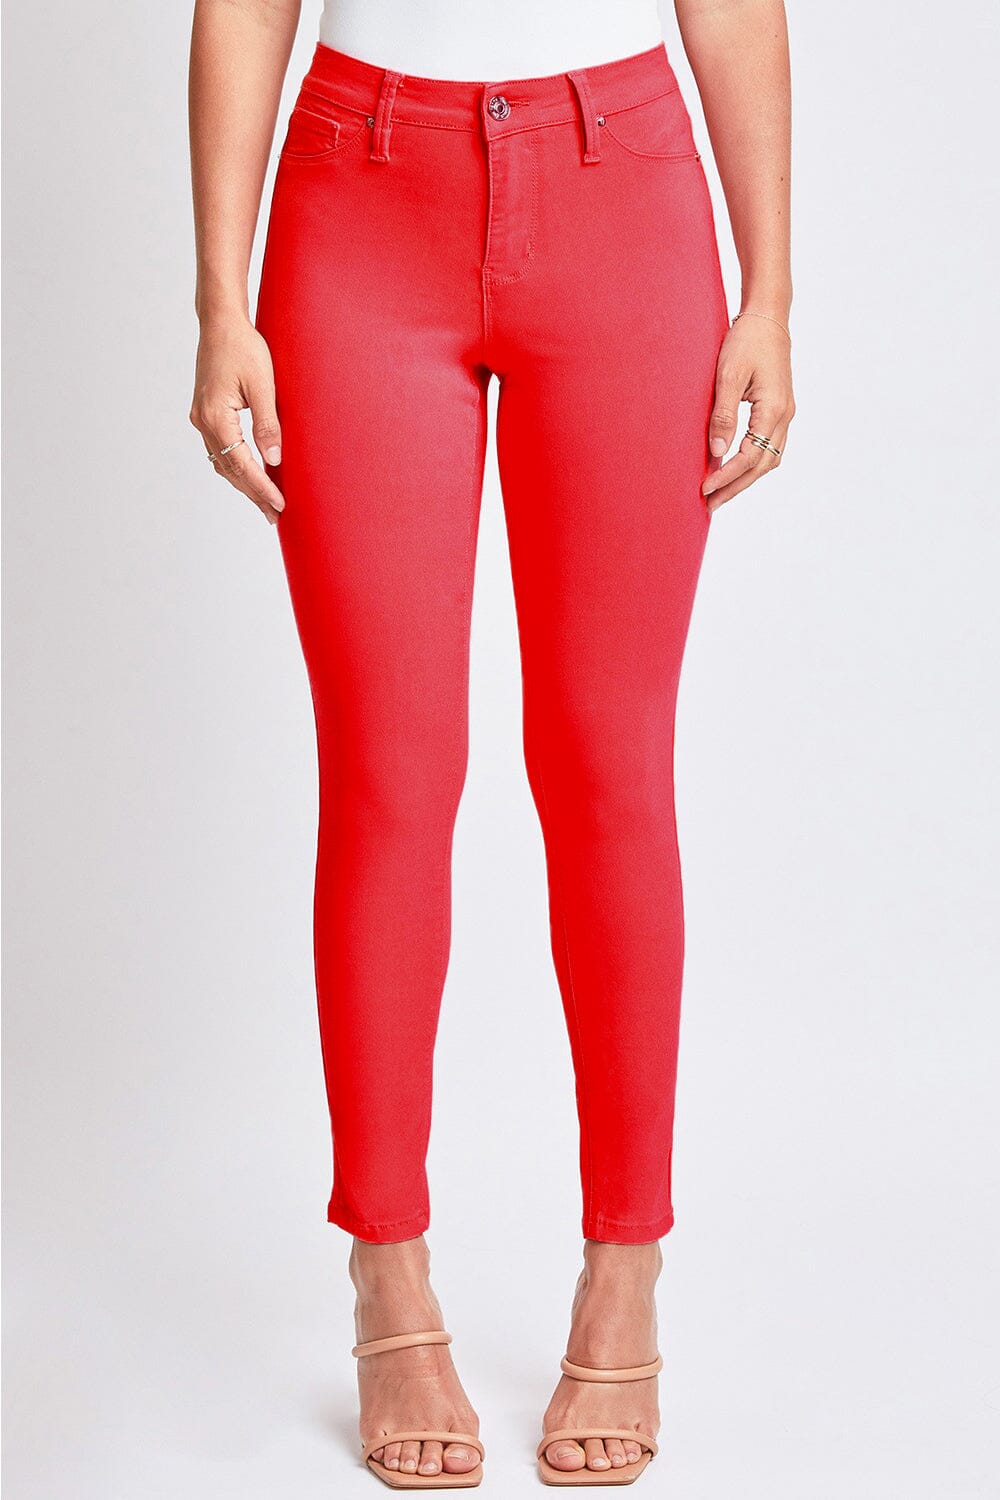 YMI Jeanswear Ruby Red Hyperstretch Mid-Rise Skinny Jeans jeans jehouze 